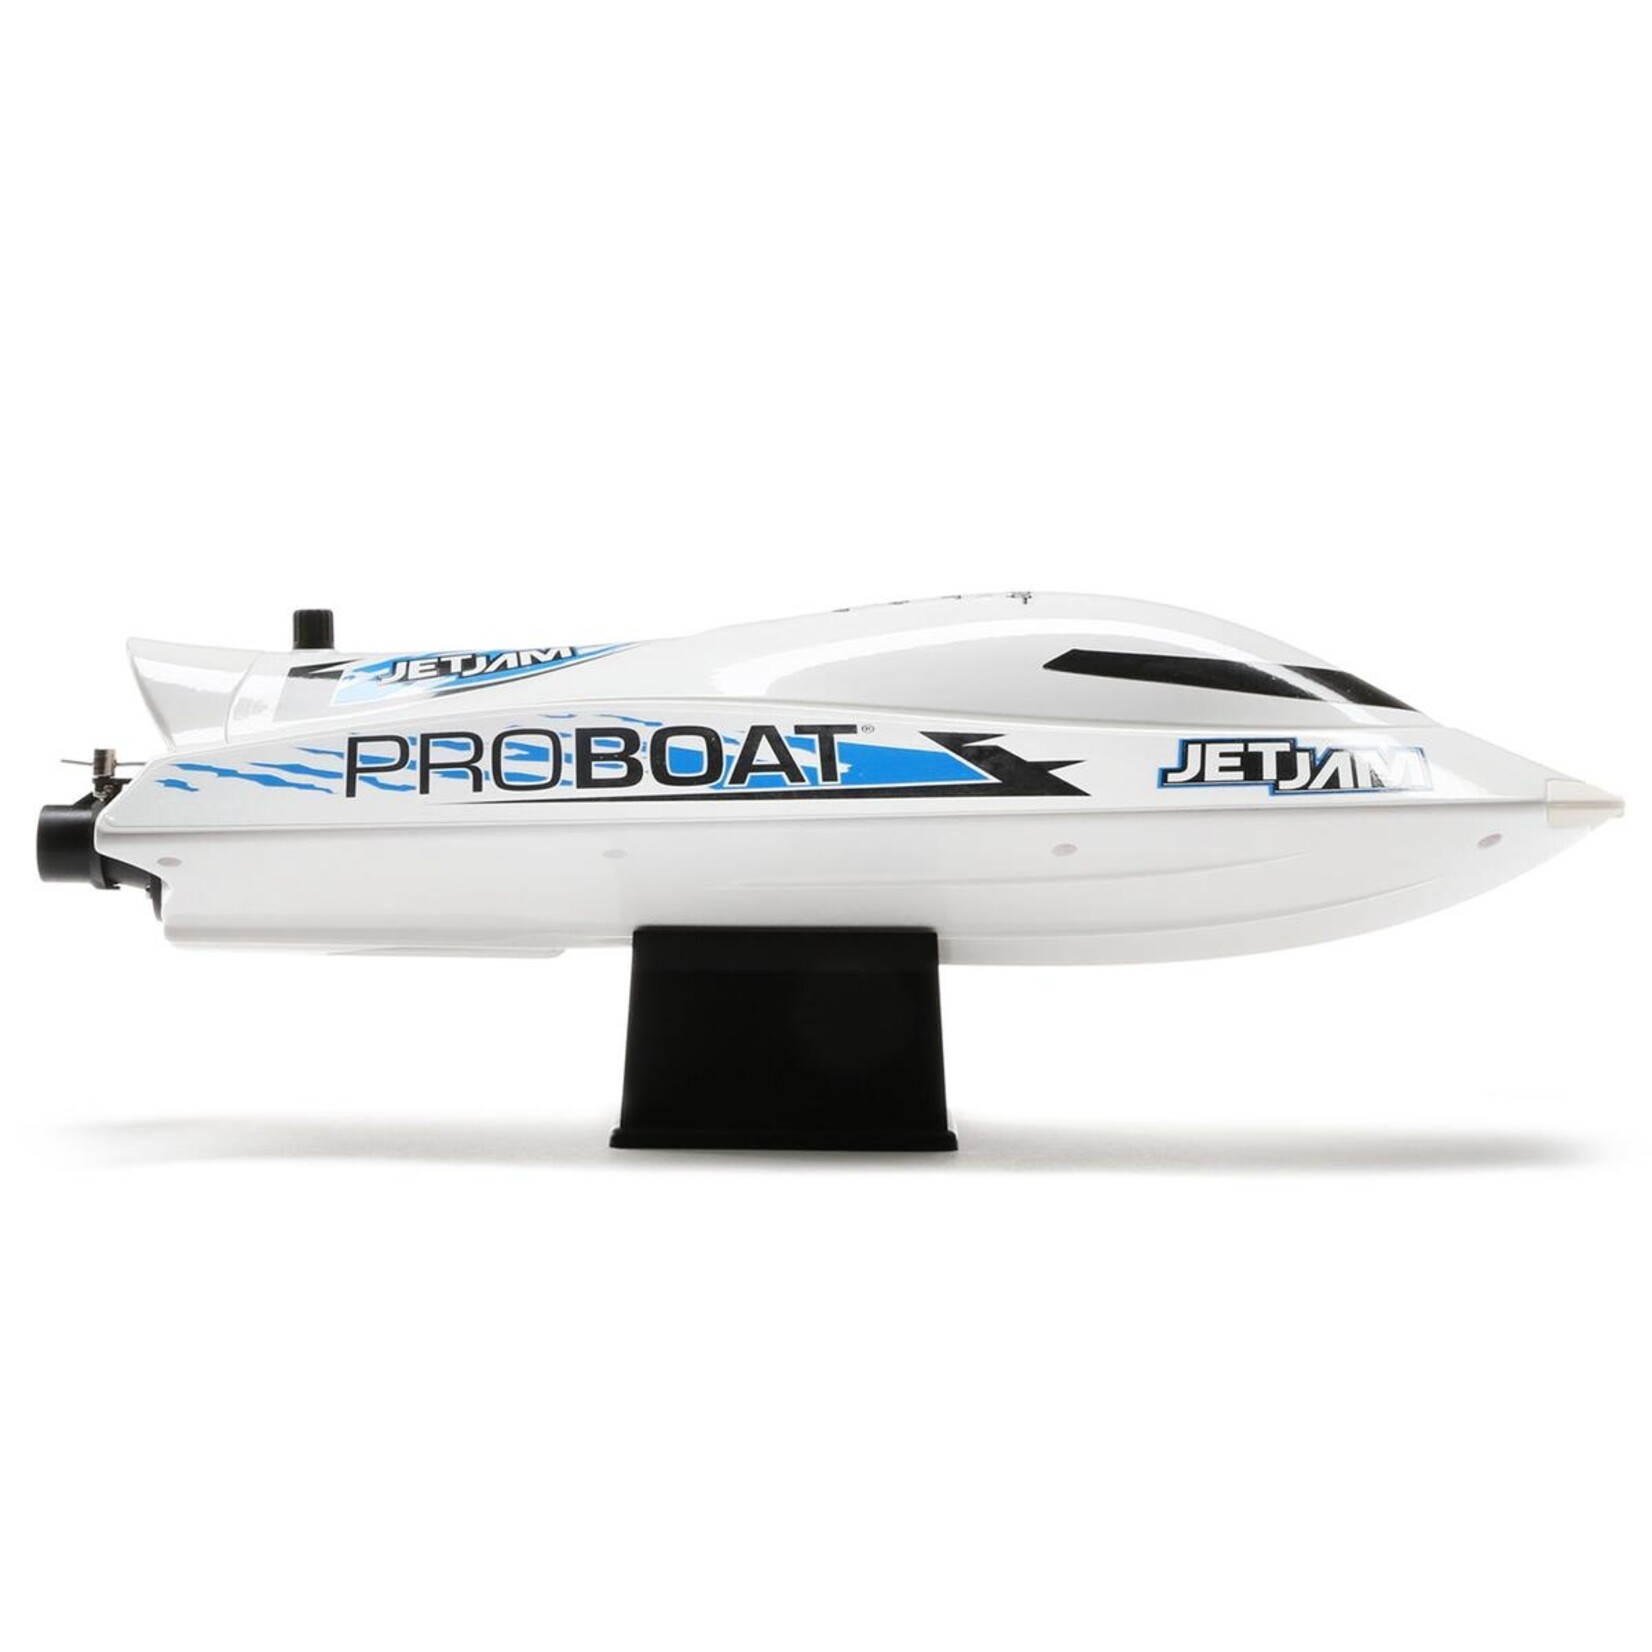 Pro Boat Pro Boat Jet Jam V2 12" Self-Righting Brushed RTR Pool Race Boat (White) w/2.4GHz Radio, Battery & Charger #PRB08031V2T2